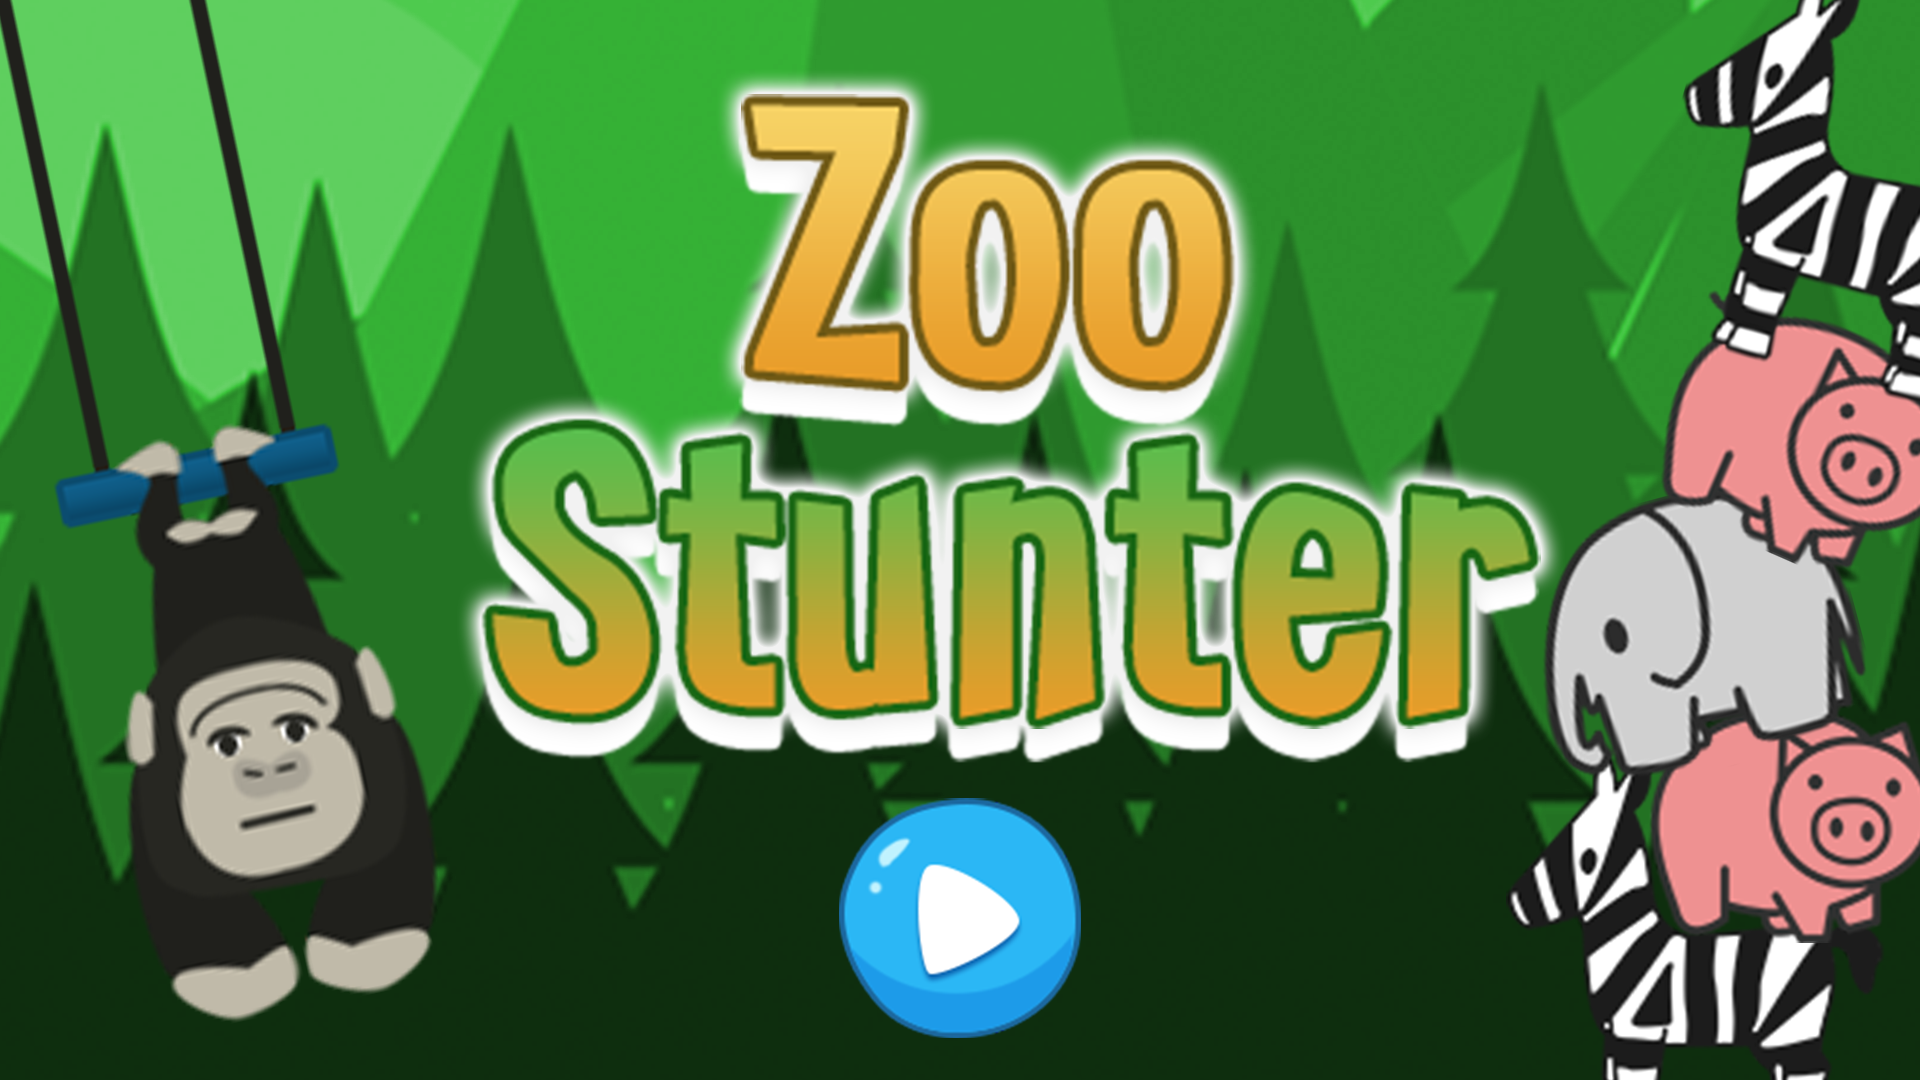 Zoo Stunter - Play!